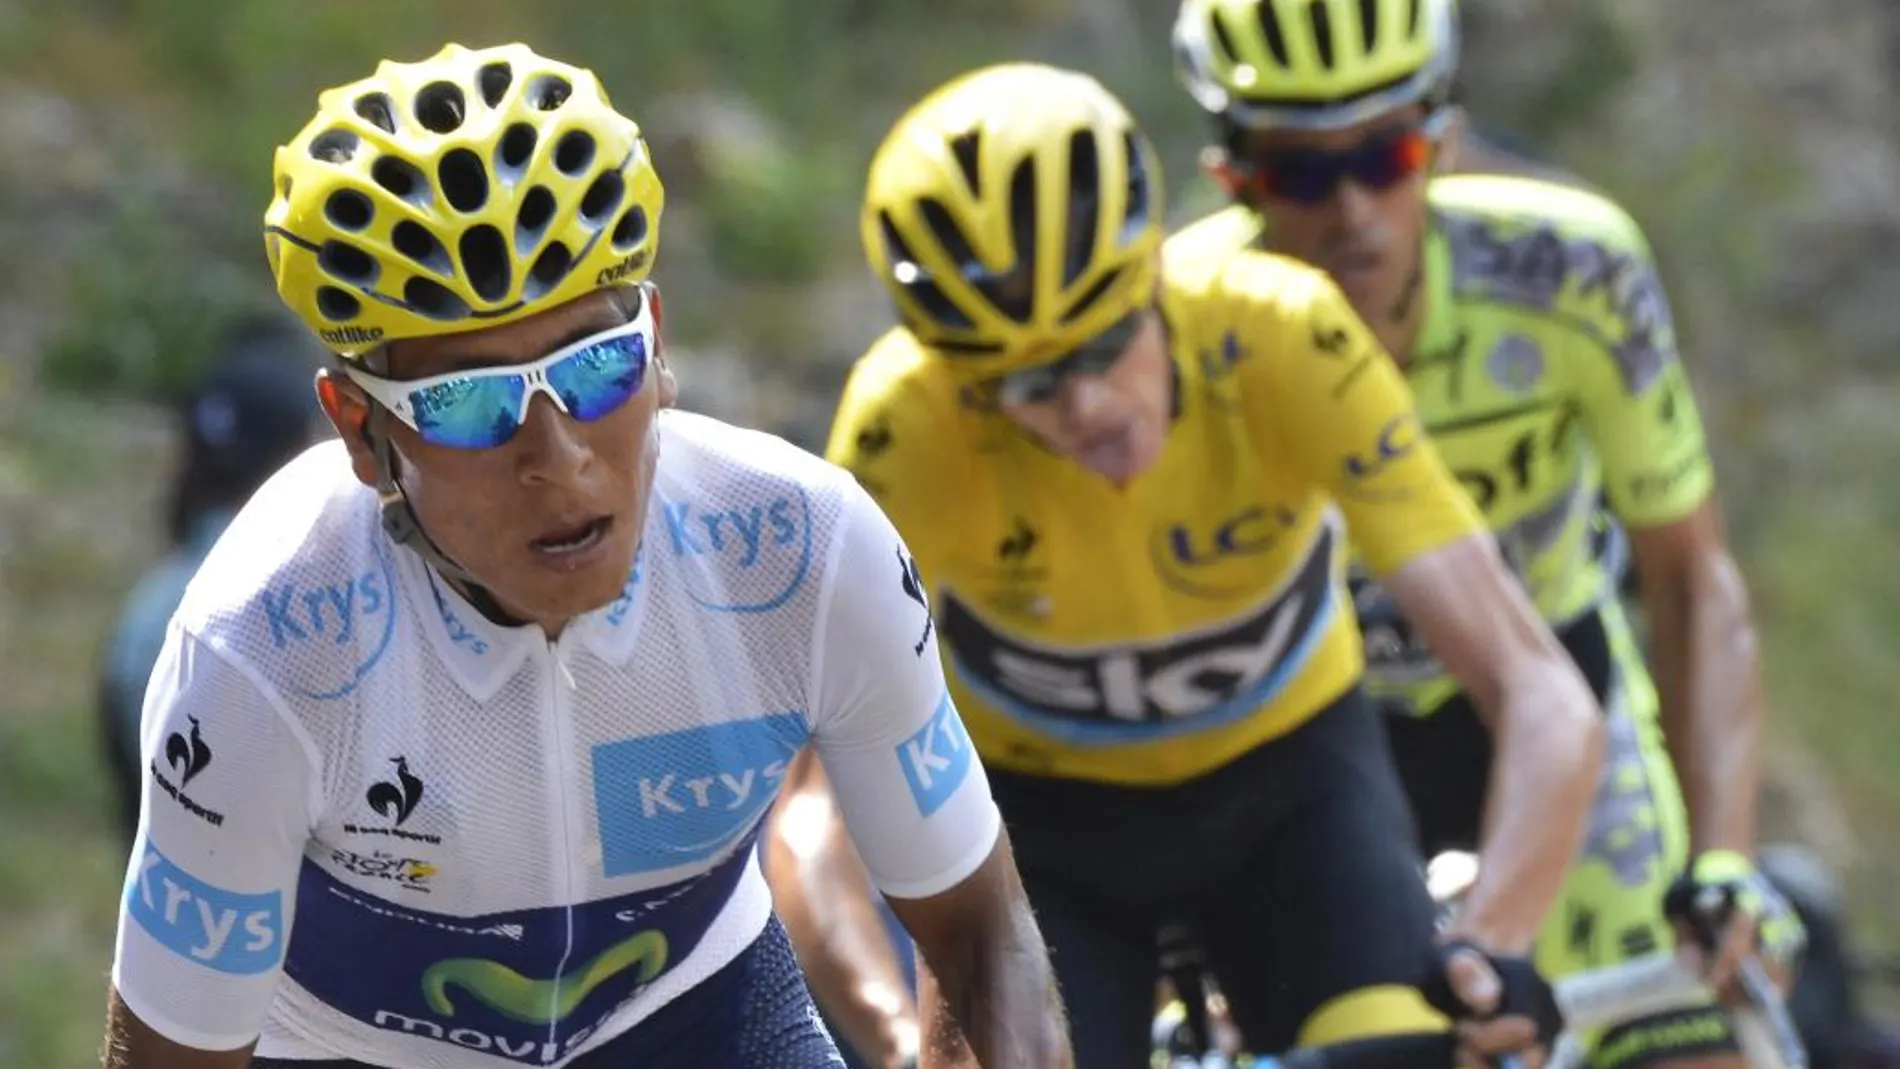 Nairo Quintana, Chris Froome y Alberto Contador, de izd a dcha, durante la 17ª etapa del Tour